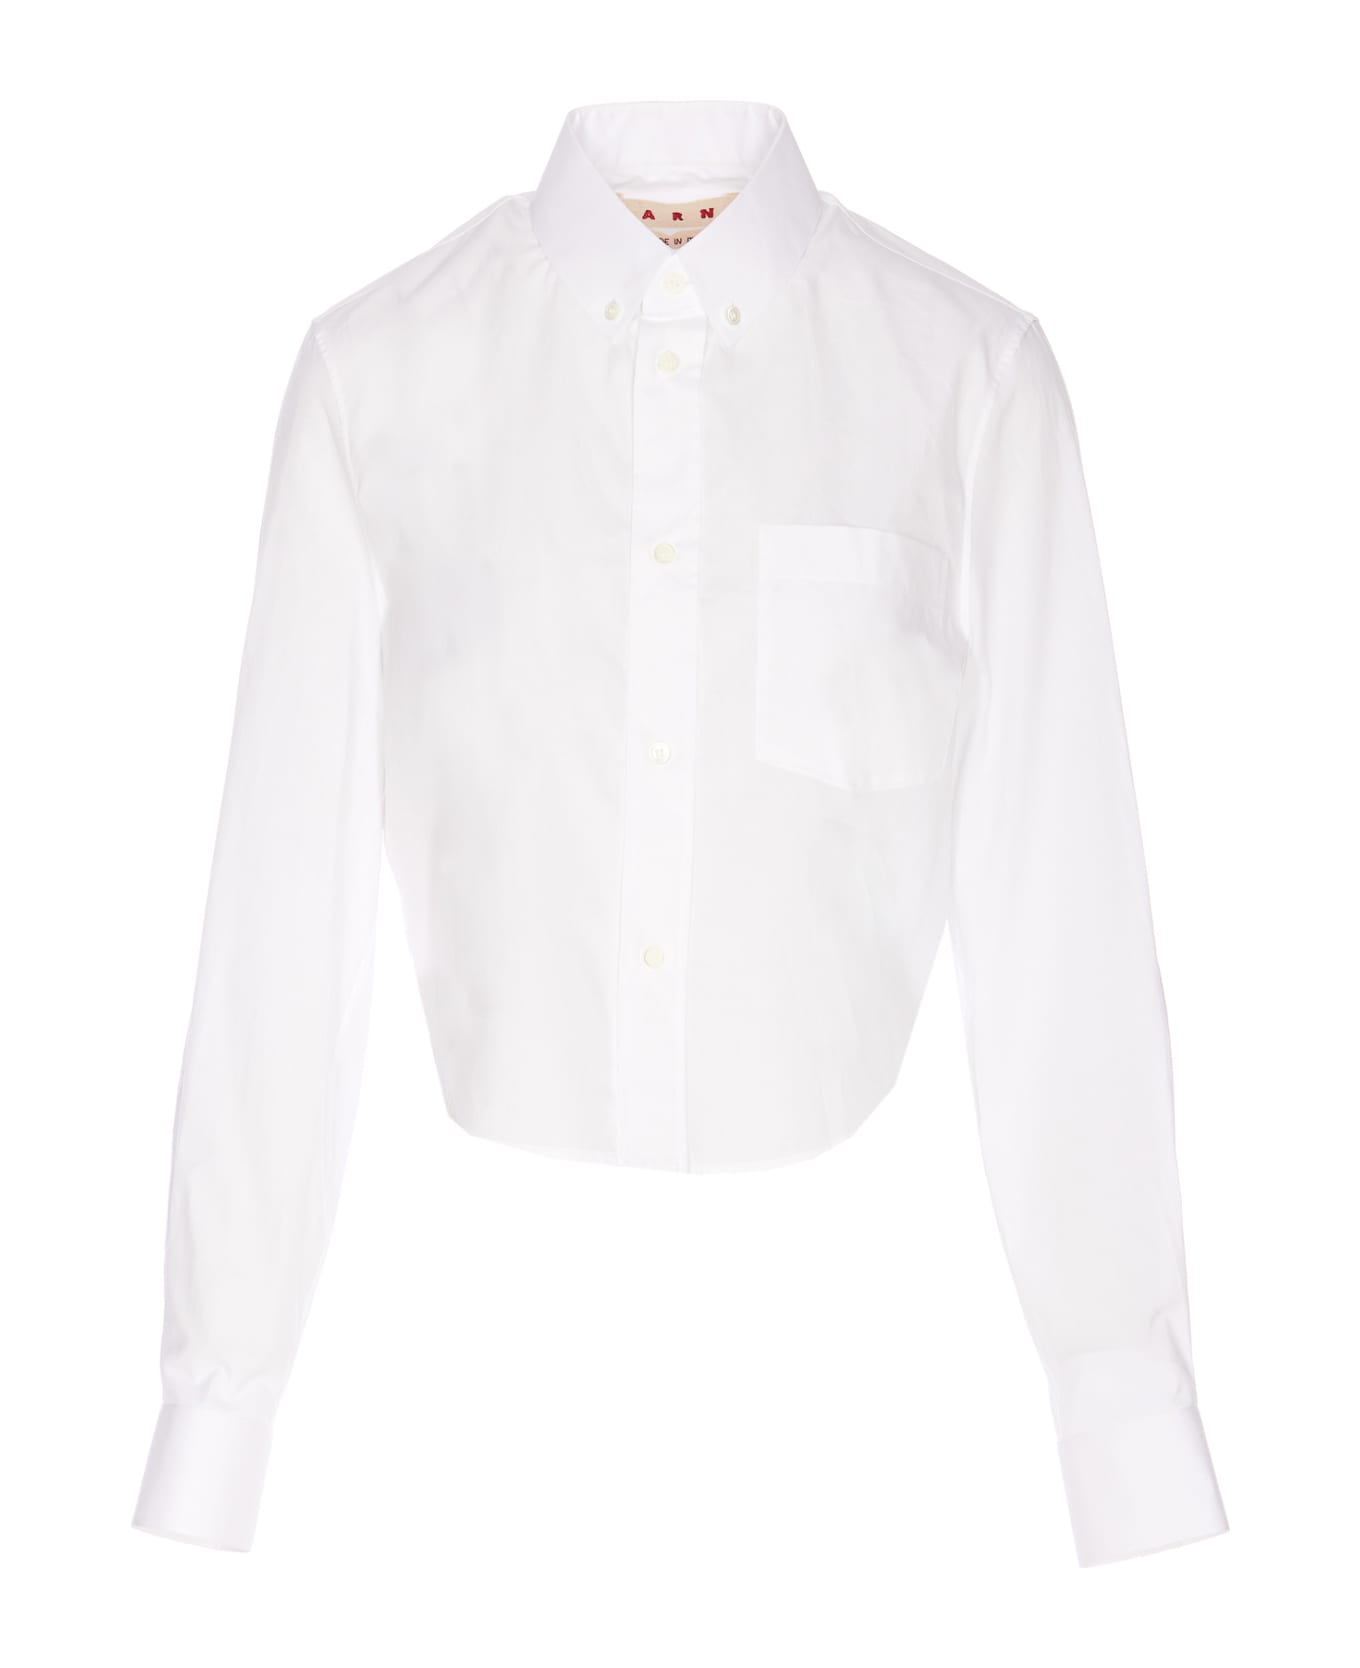 Marni Logo Shirt - White